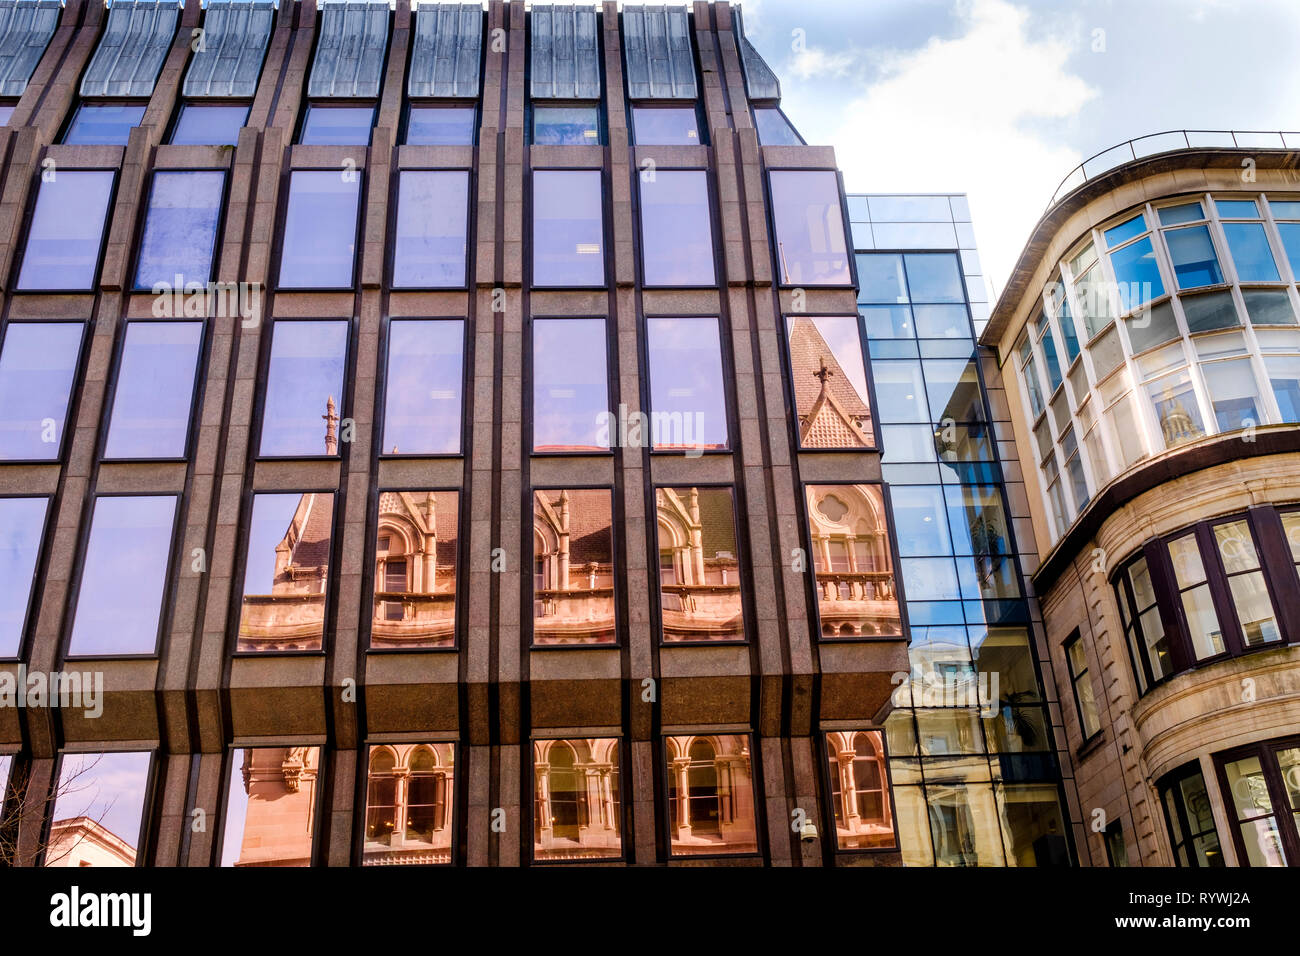 Edificios antiguos se reflejan en la fachada de cristal de un moderno bloque de oficinas en Buchanan Street, Glasgow, Escocia Foto de stock